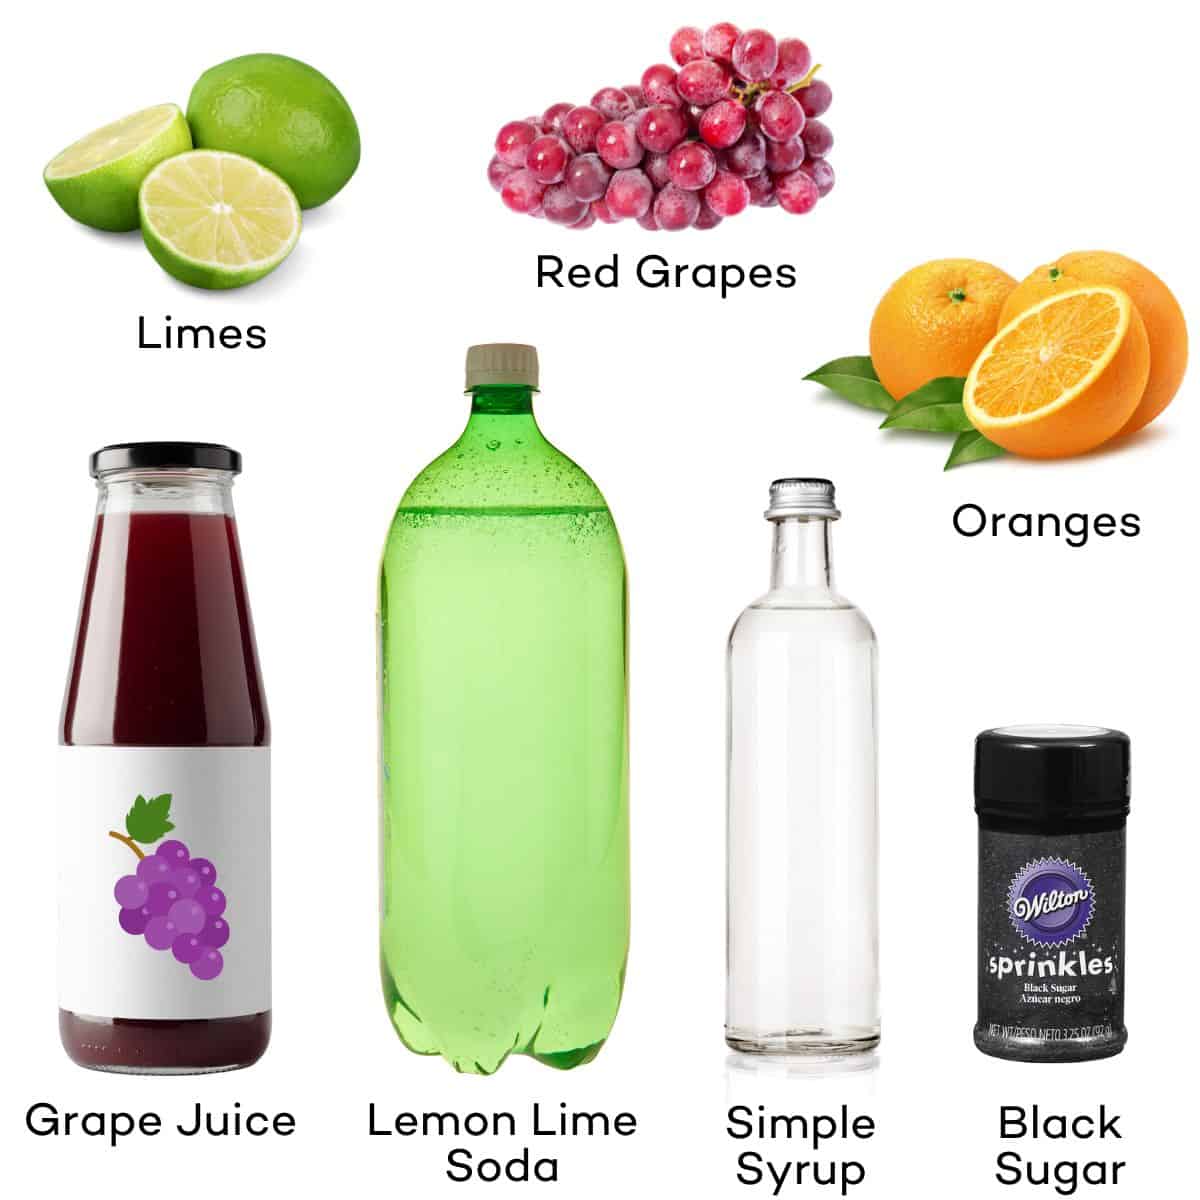 Ingredients in a Halloween mocktail - Grape juice, lemon lime soda, limes, simple syrup, oranges, grapes, black sugar.